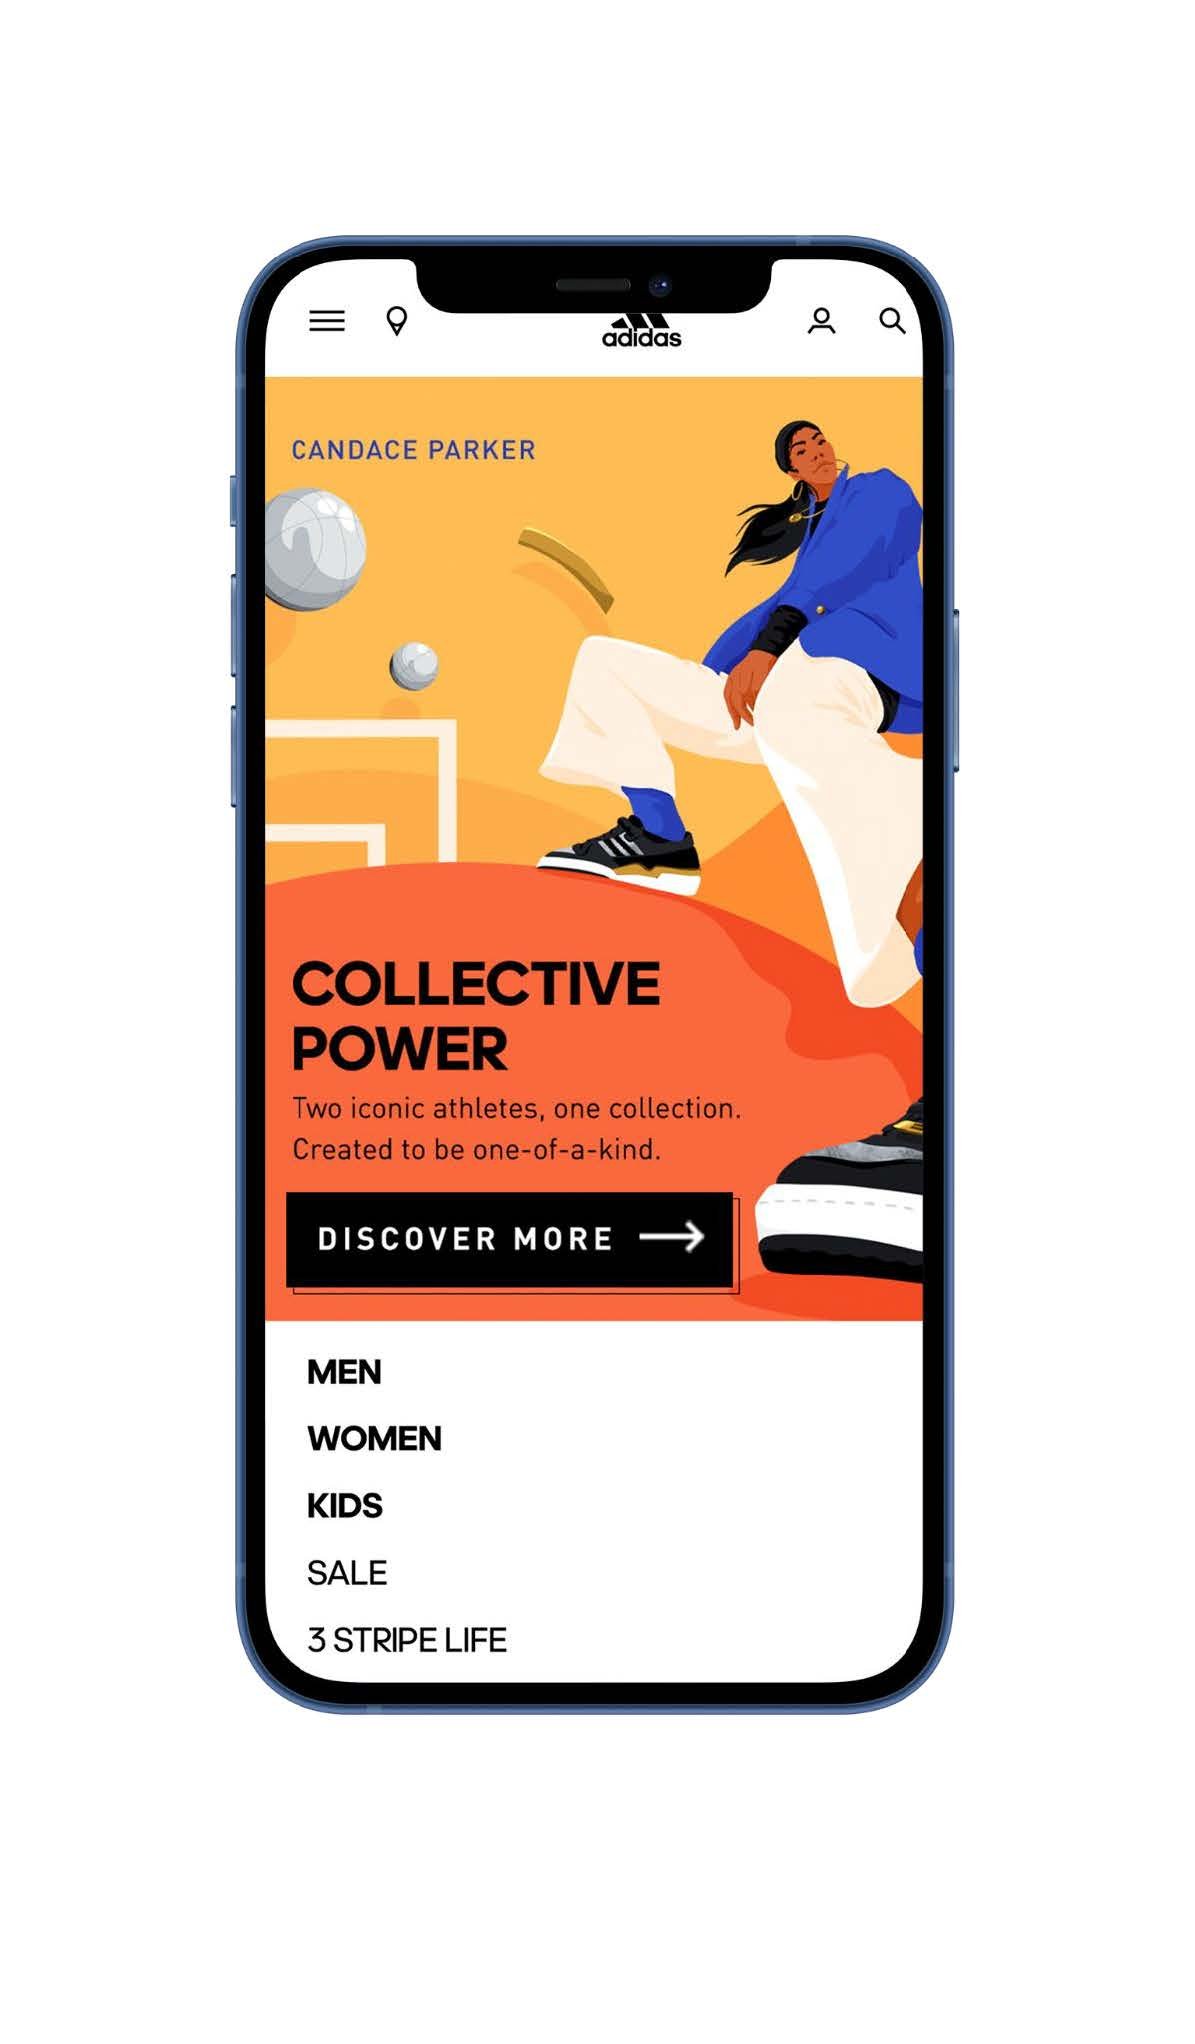 adidas_Collective Power_Digital Campaign1.jpg